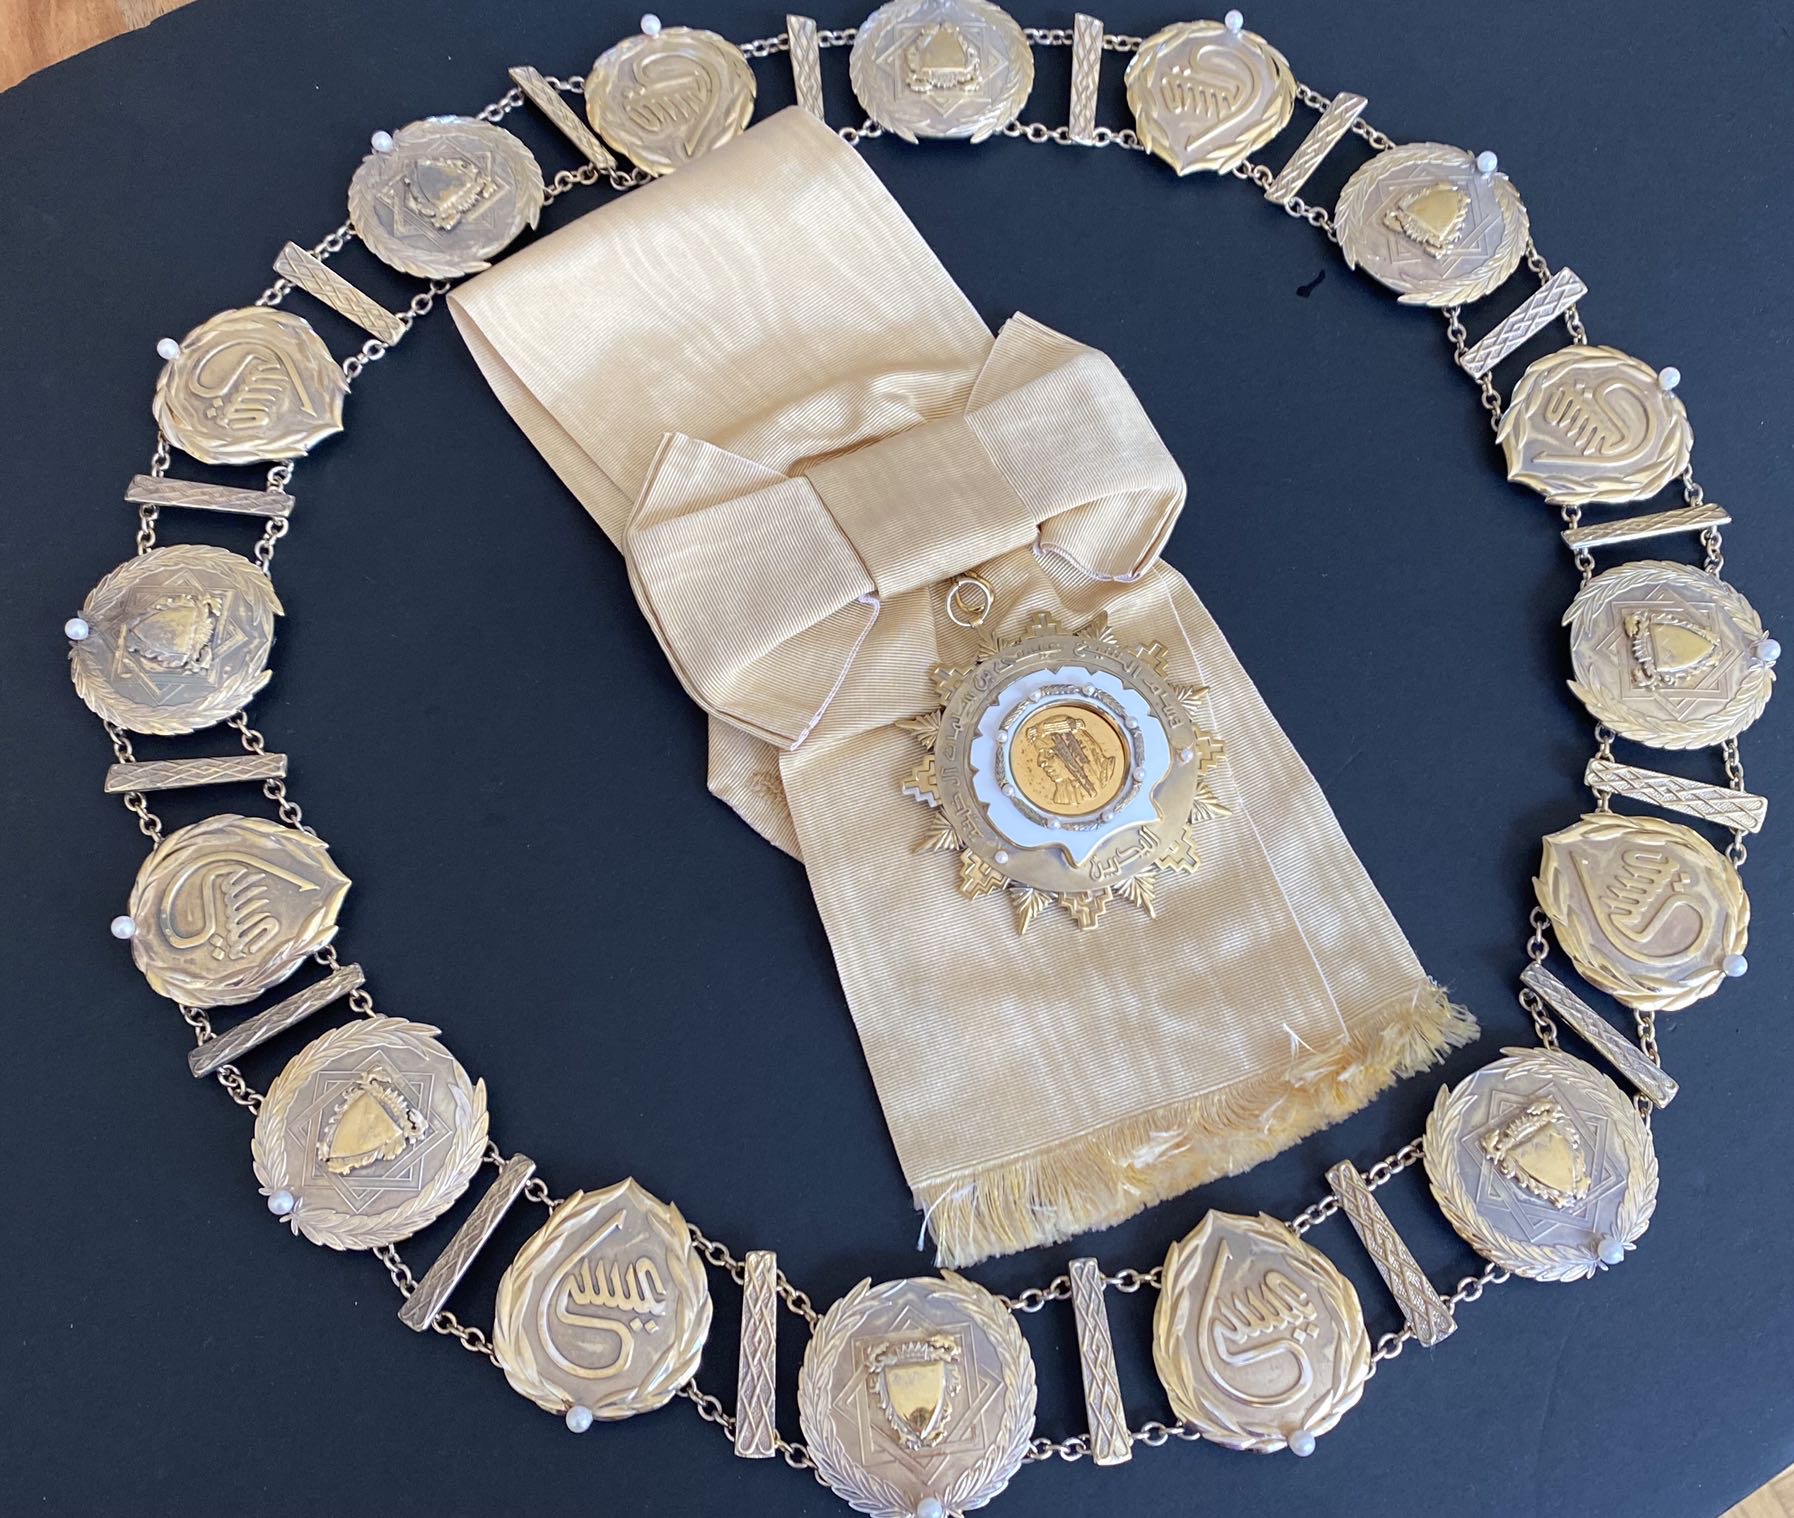 Kingdom of Bahrain Order Of Sheikh Issa Ibn Salman Al Khalifa   Collar & Badge Exceptional  Presidential Gift  مملكة البحرين  قلادة الشيخ عيسى بن سلمان ال خليفة  هدية ملكية